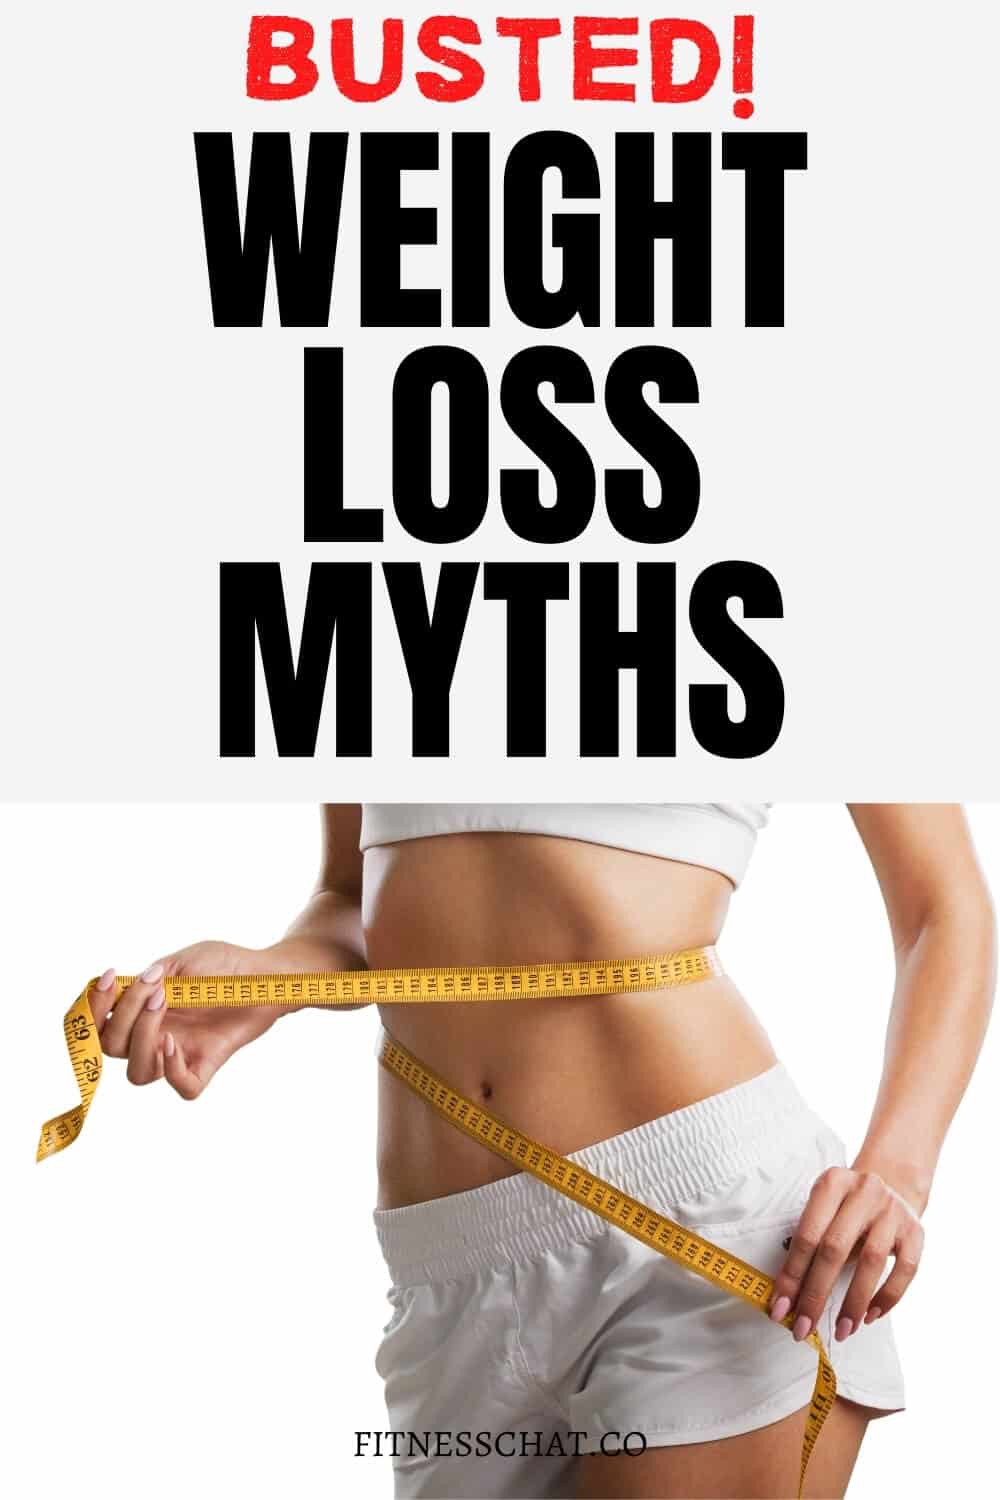 weight loss myths debunked 